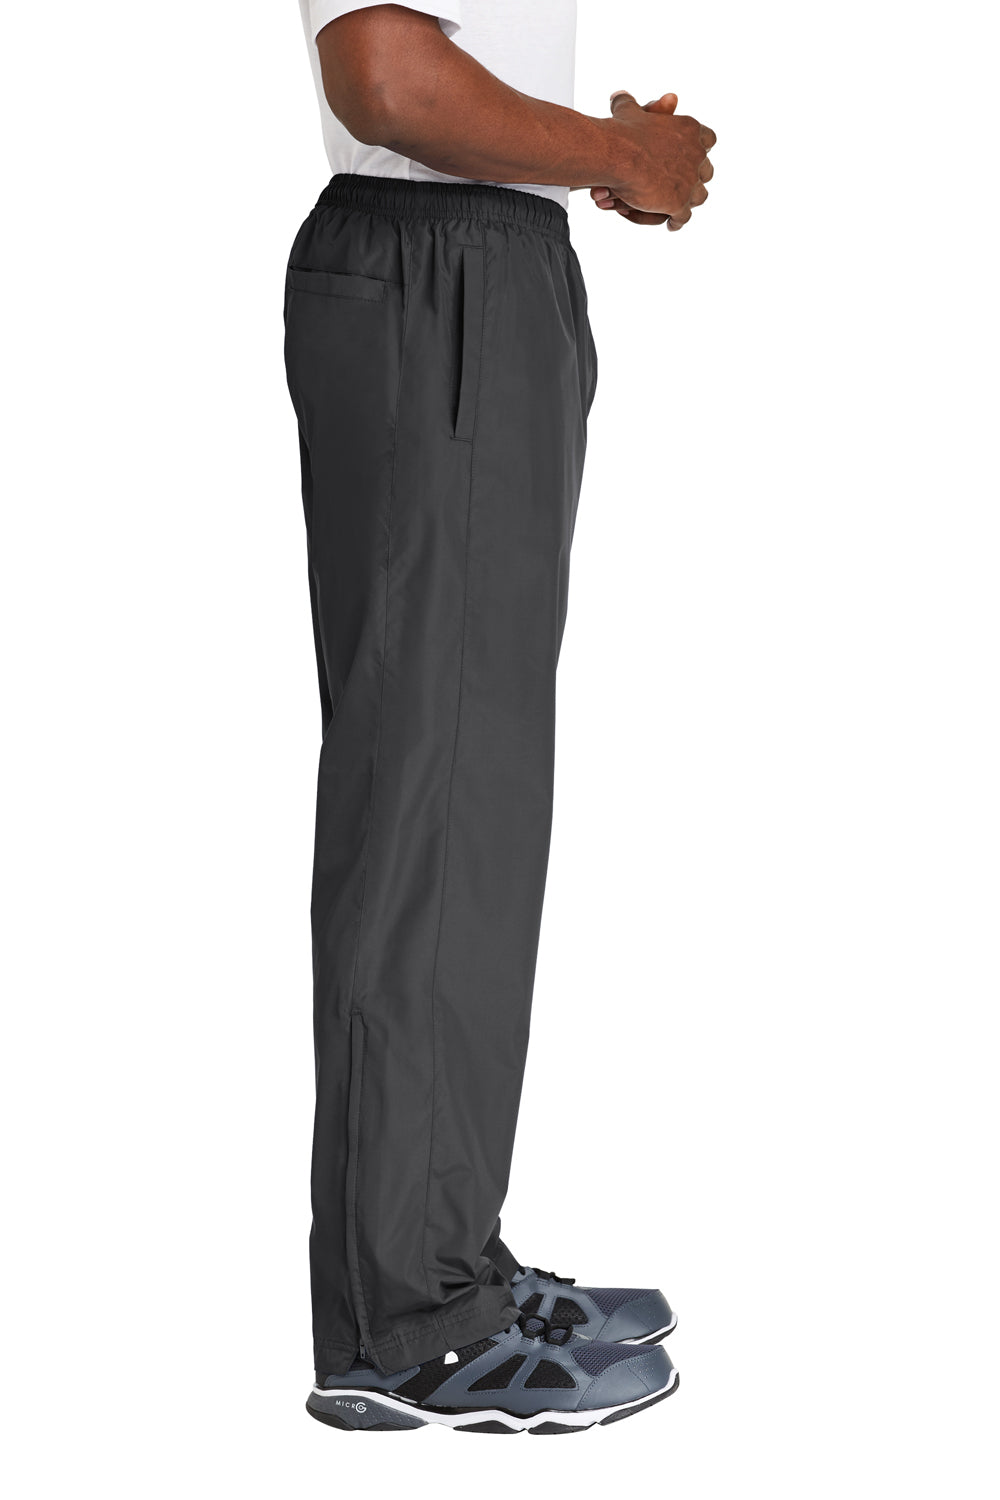 Sport-Tek PST74 Wind Pants w/ Pockets Graphite Grey Side